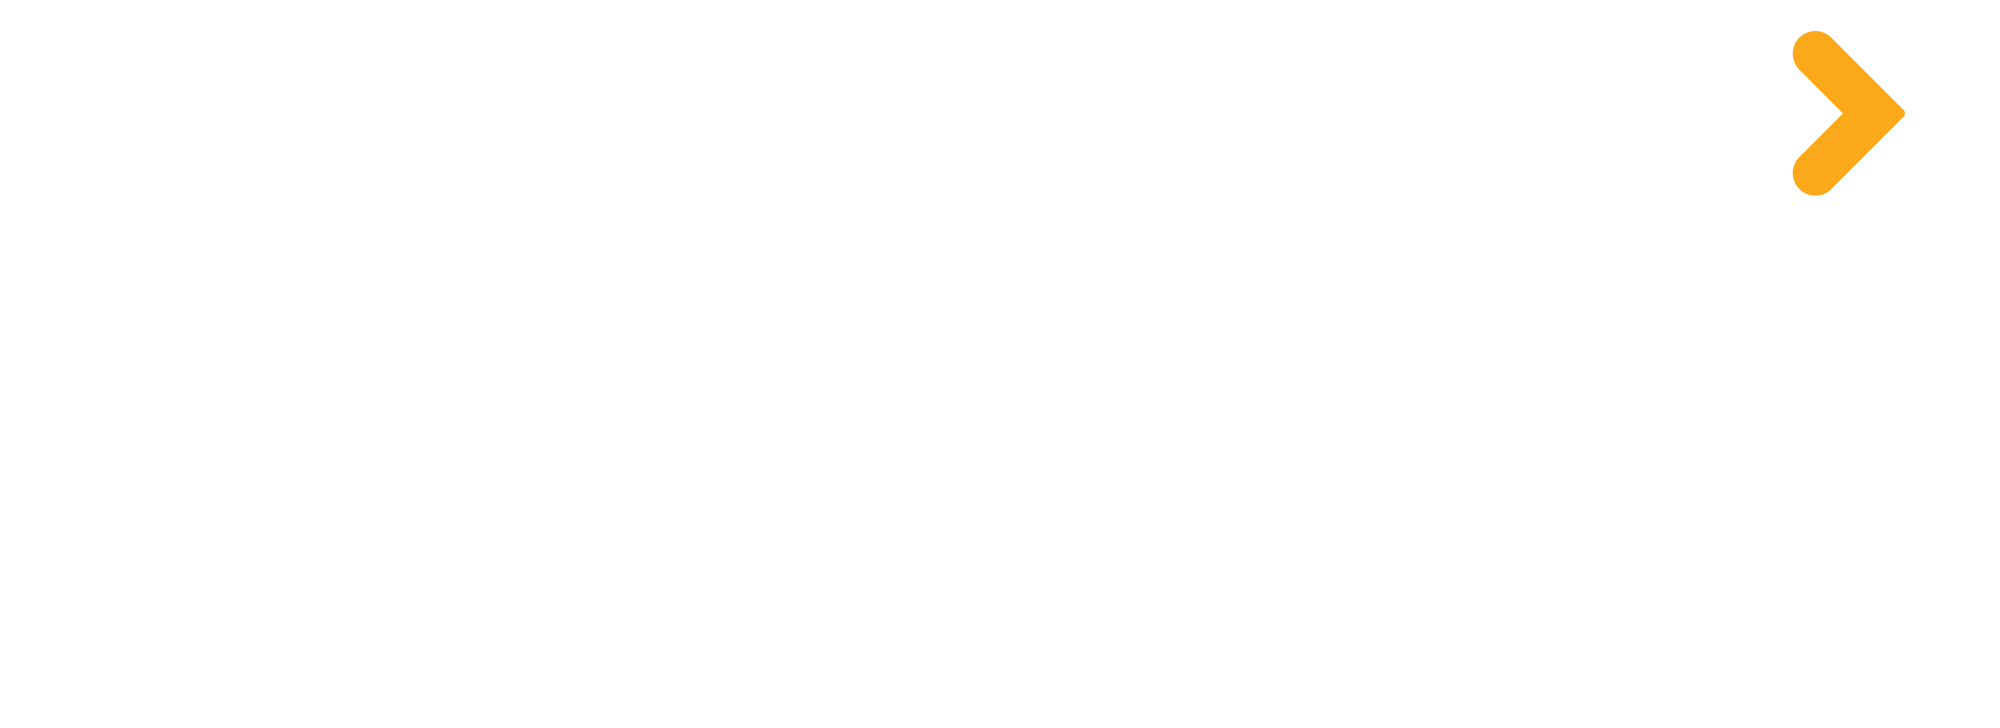 Quick Loans Online